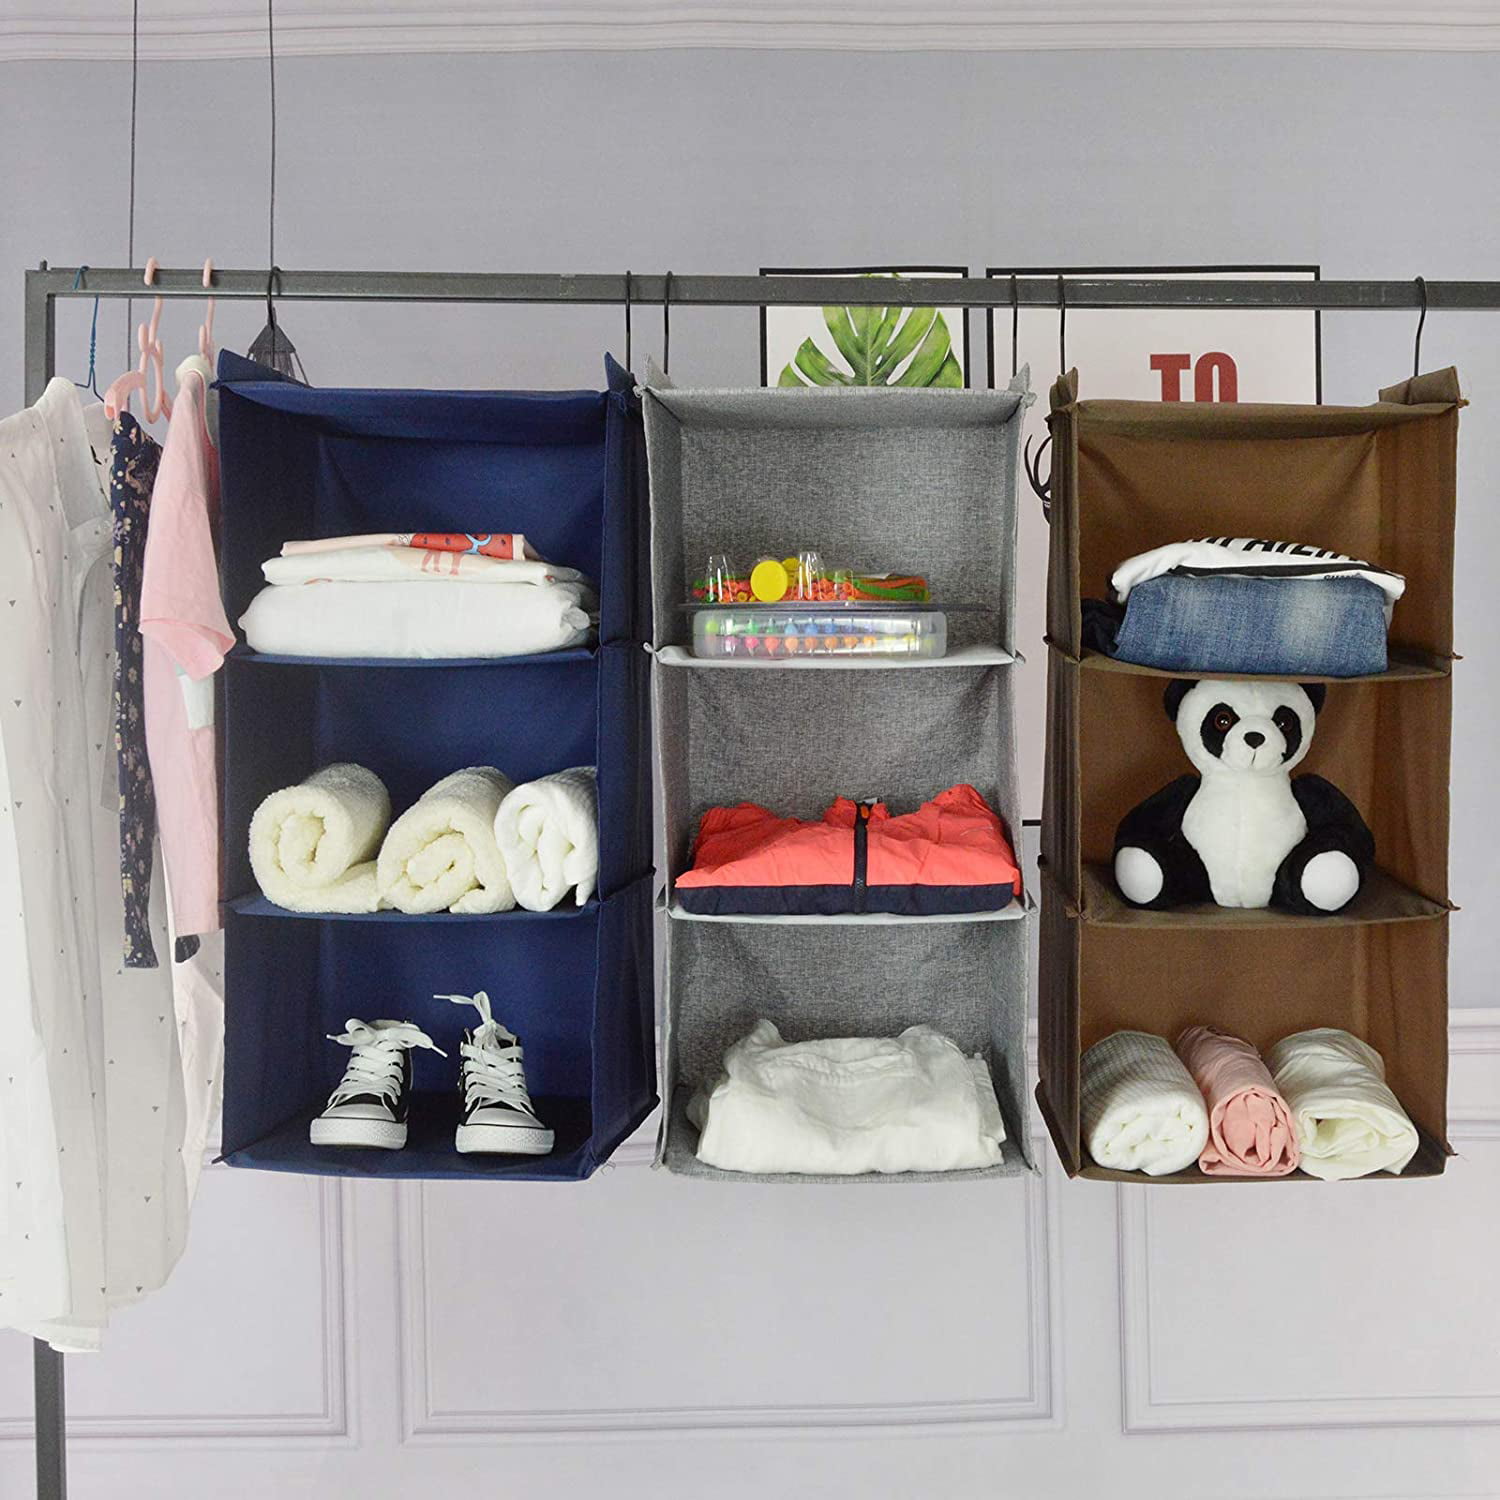 5-Shelf Hanging Storage Closet Organizer, Oxford RV Storage and Organization for Wardrobe, Inside, Camper Accessories, Nursery, Ba, Size: 13.78 x